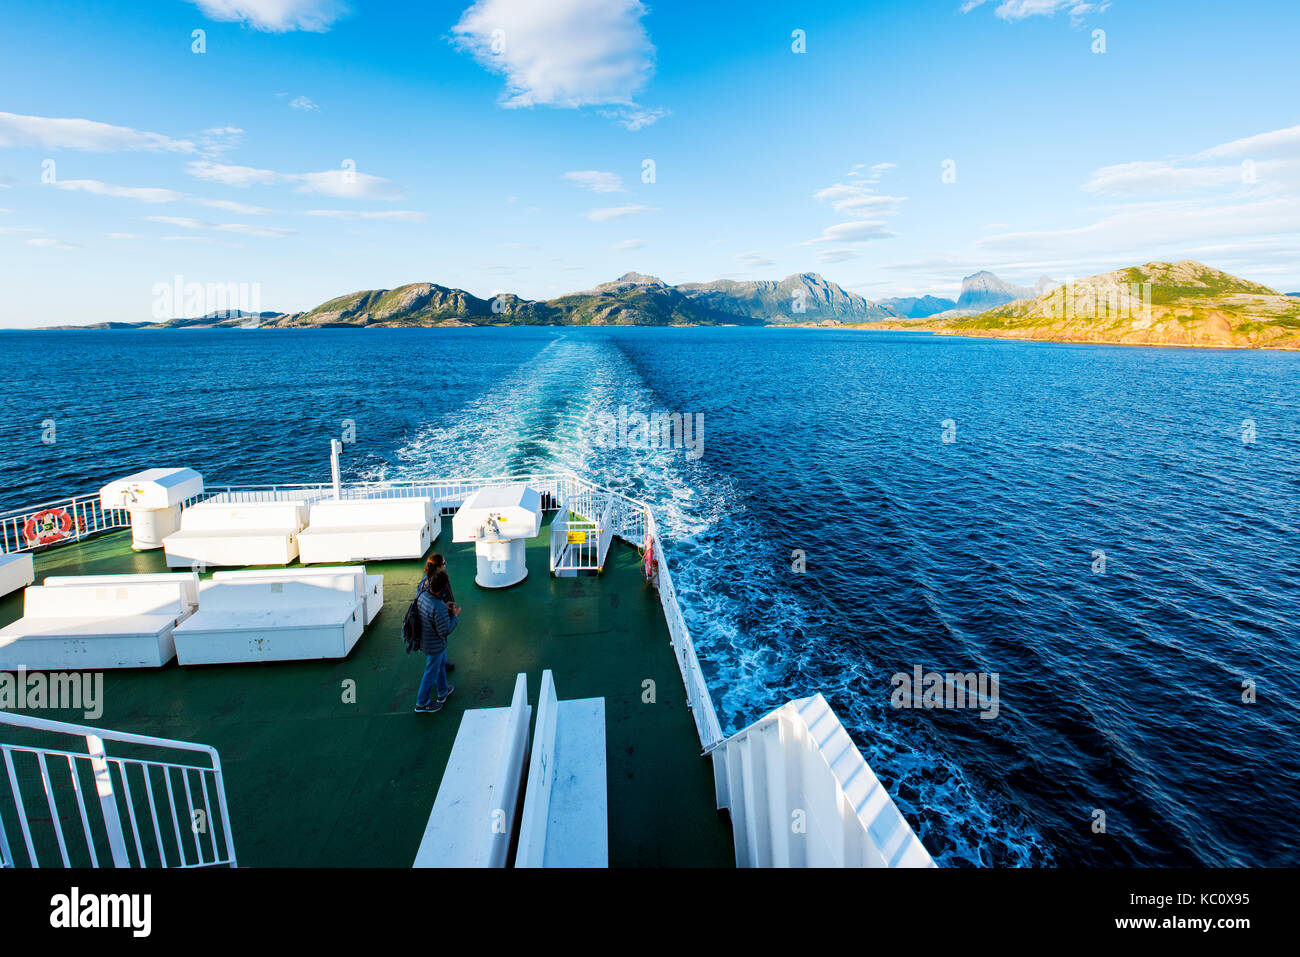 Kystriksveien - the coastal route along the Nordland coastline in Norway. Image taken on the ferry crossing from Jektvik to Kilboghavn Stock Photo